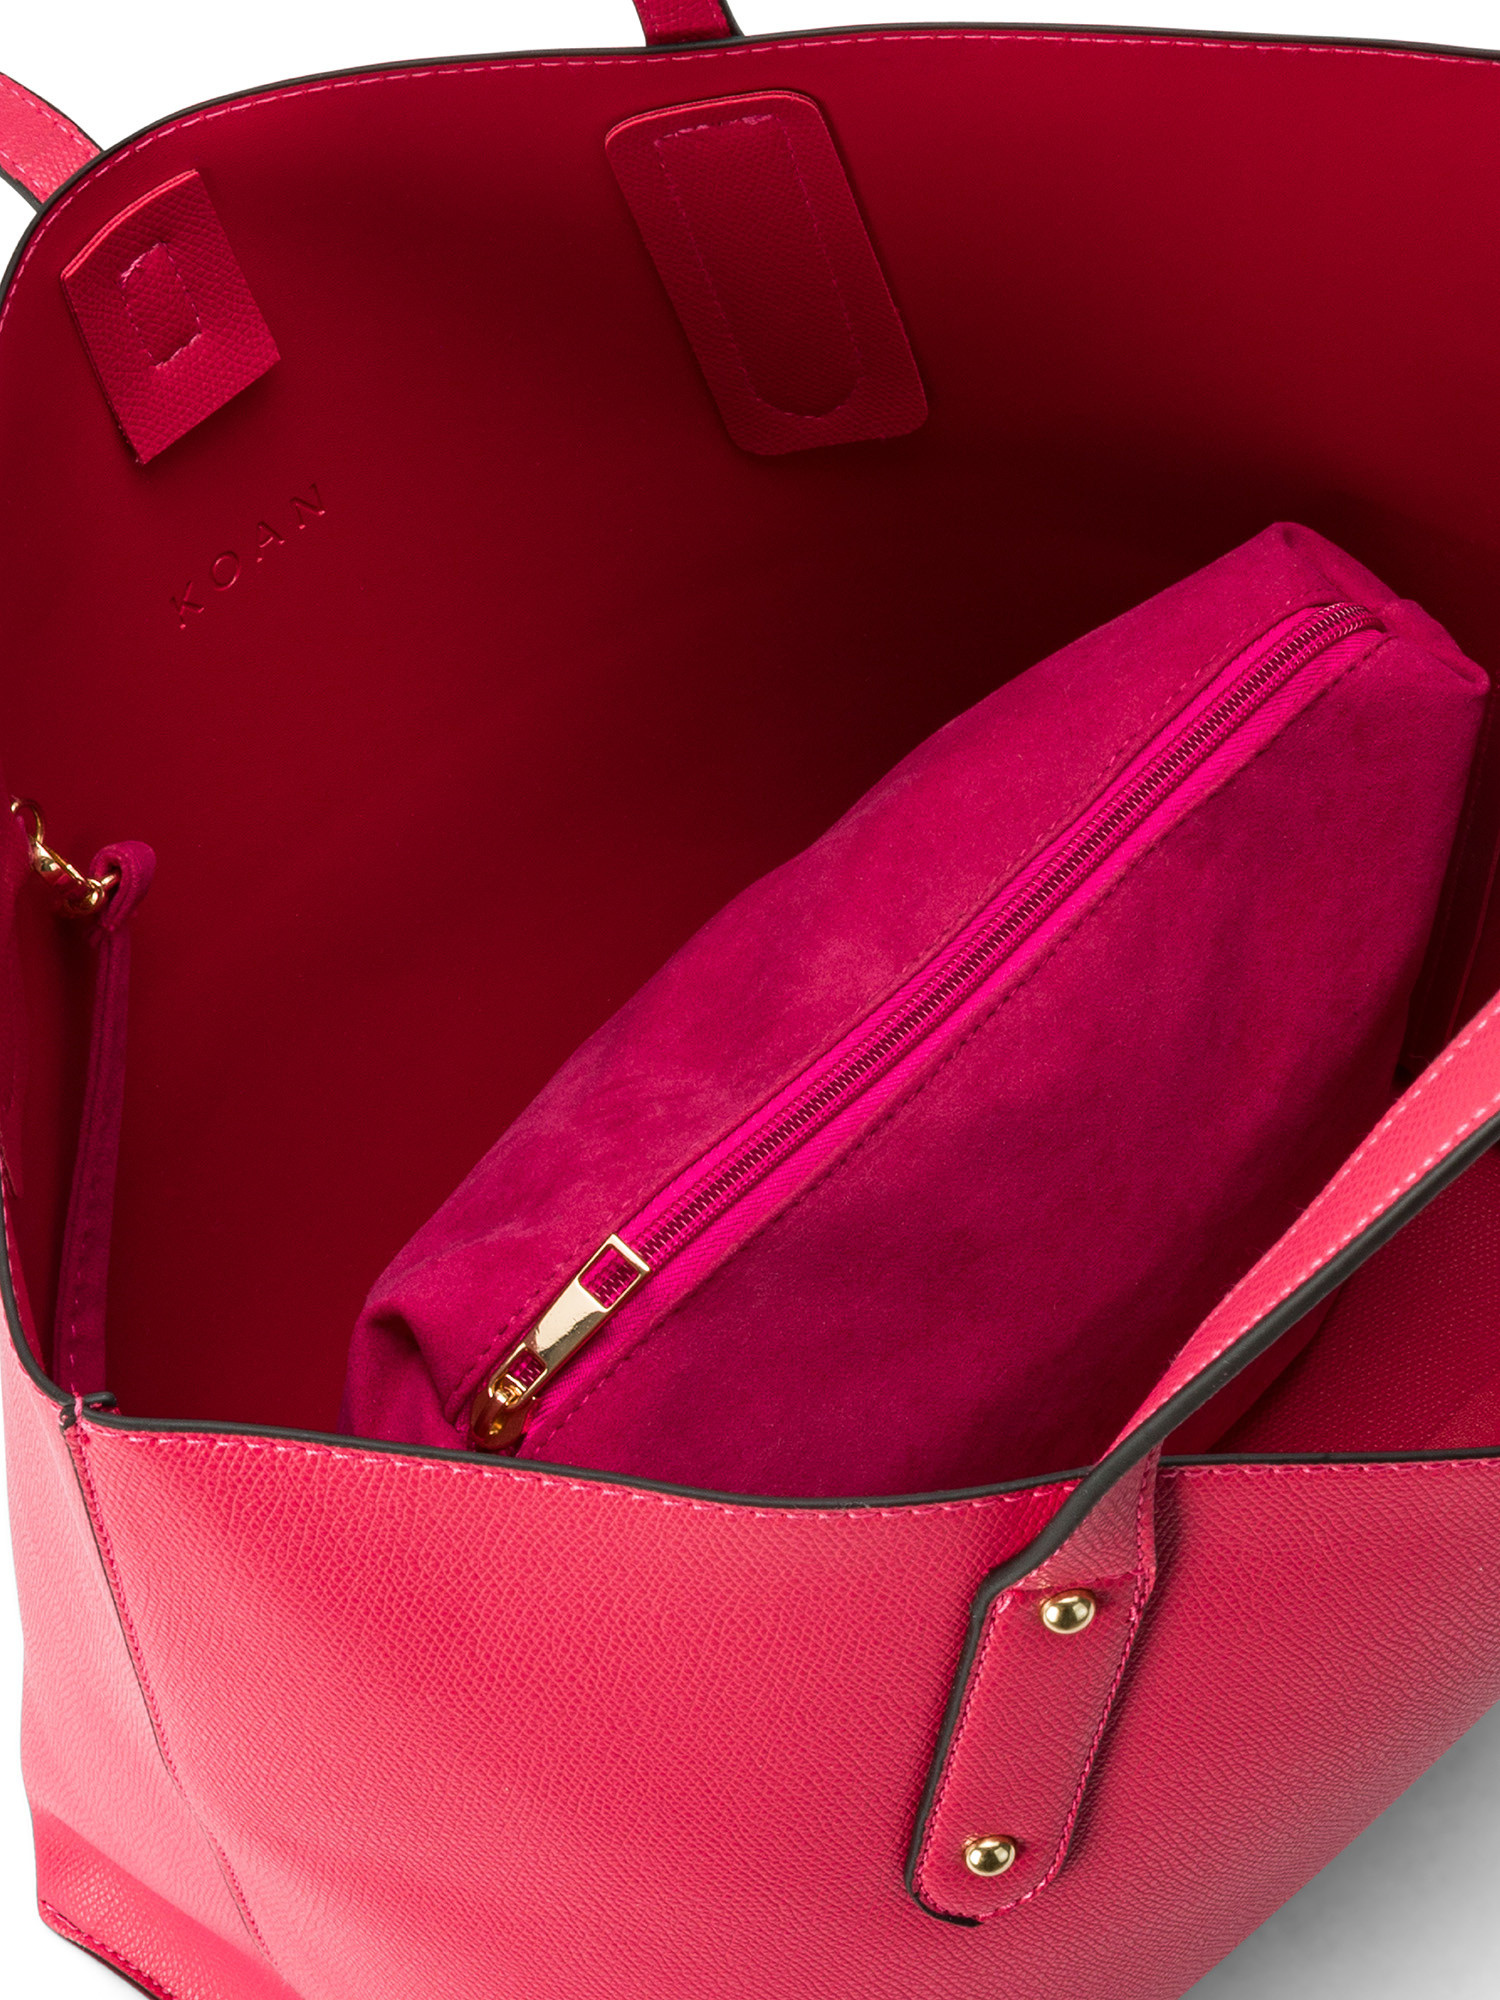 Koan - Shopping bag, Rosa fuxia, large image number 2